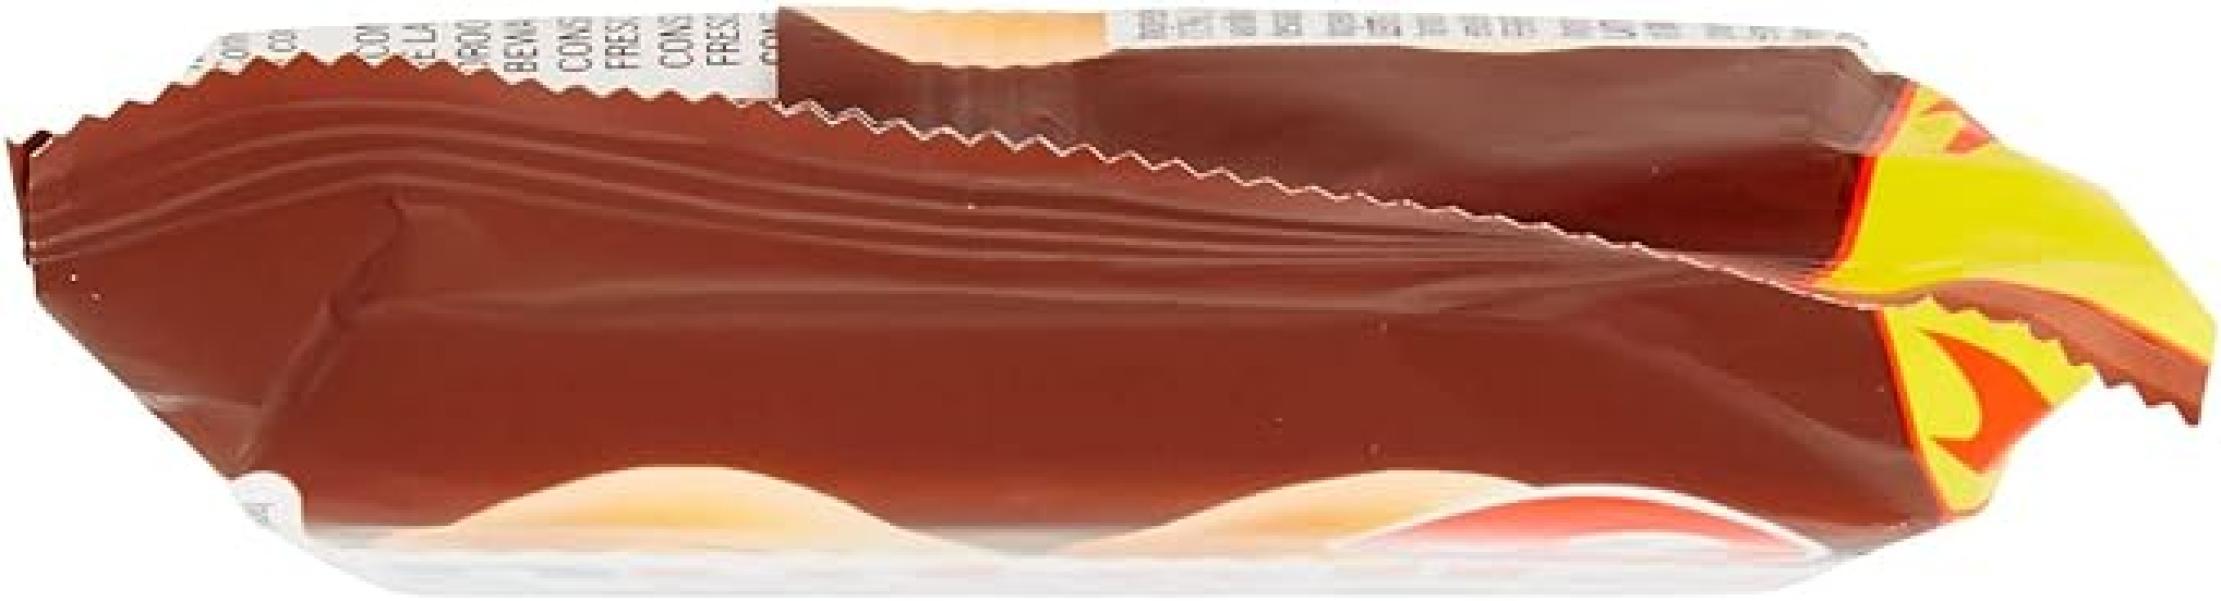 merendina-al-cioccolato-b-ready-nutella-44-gr-5